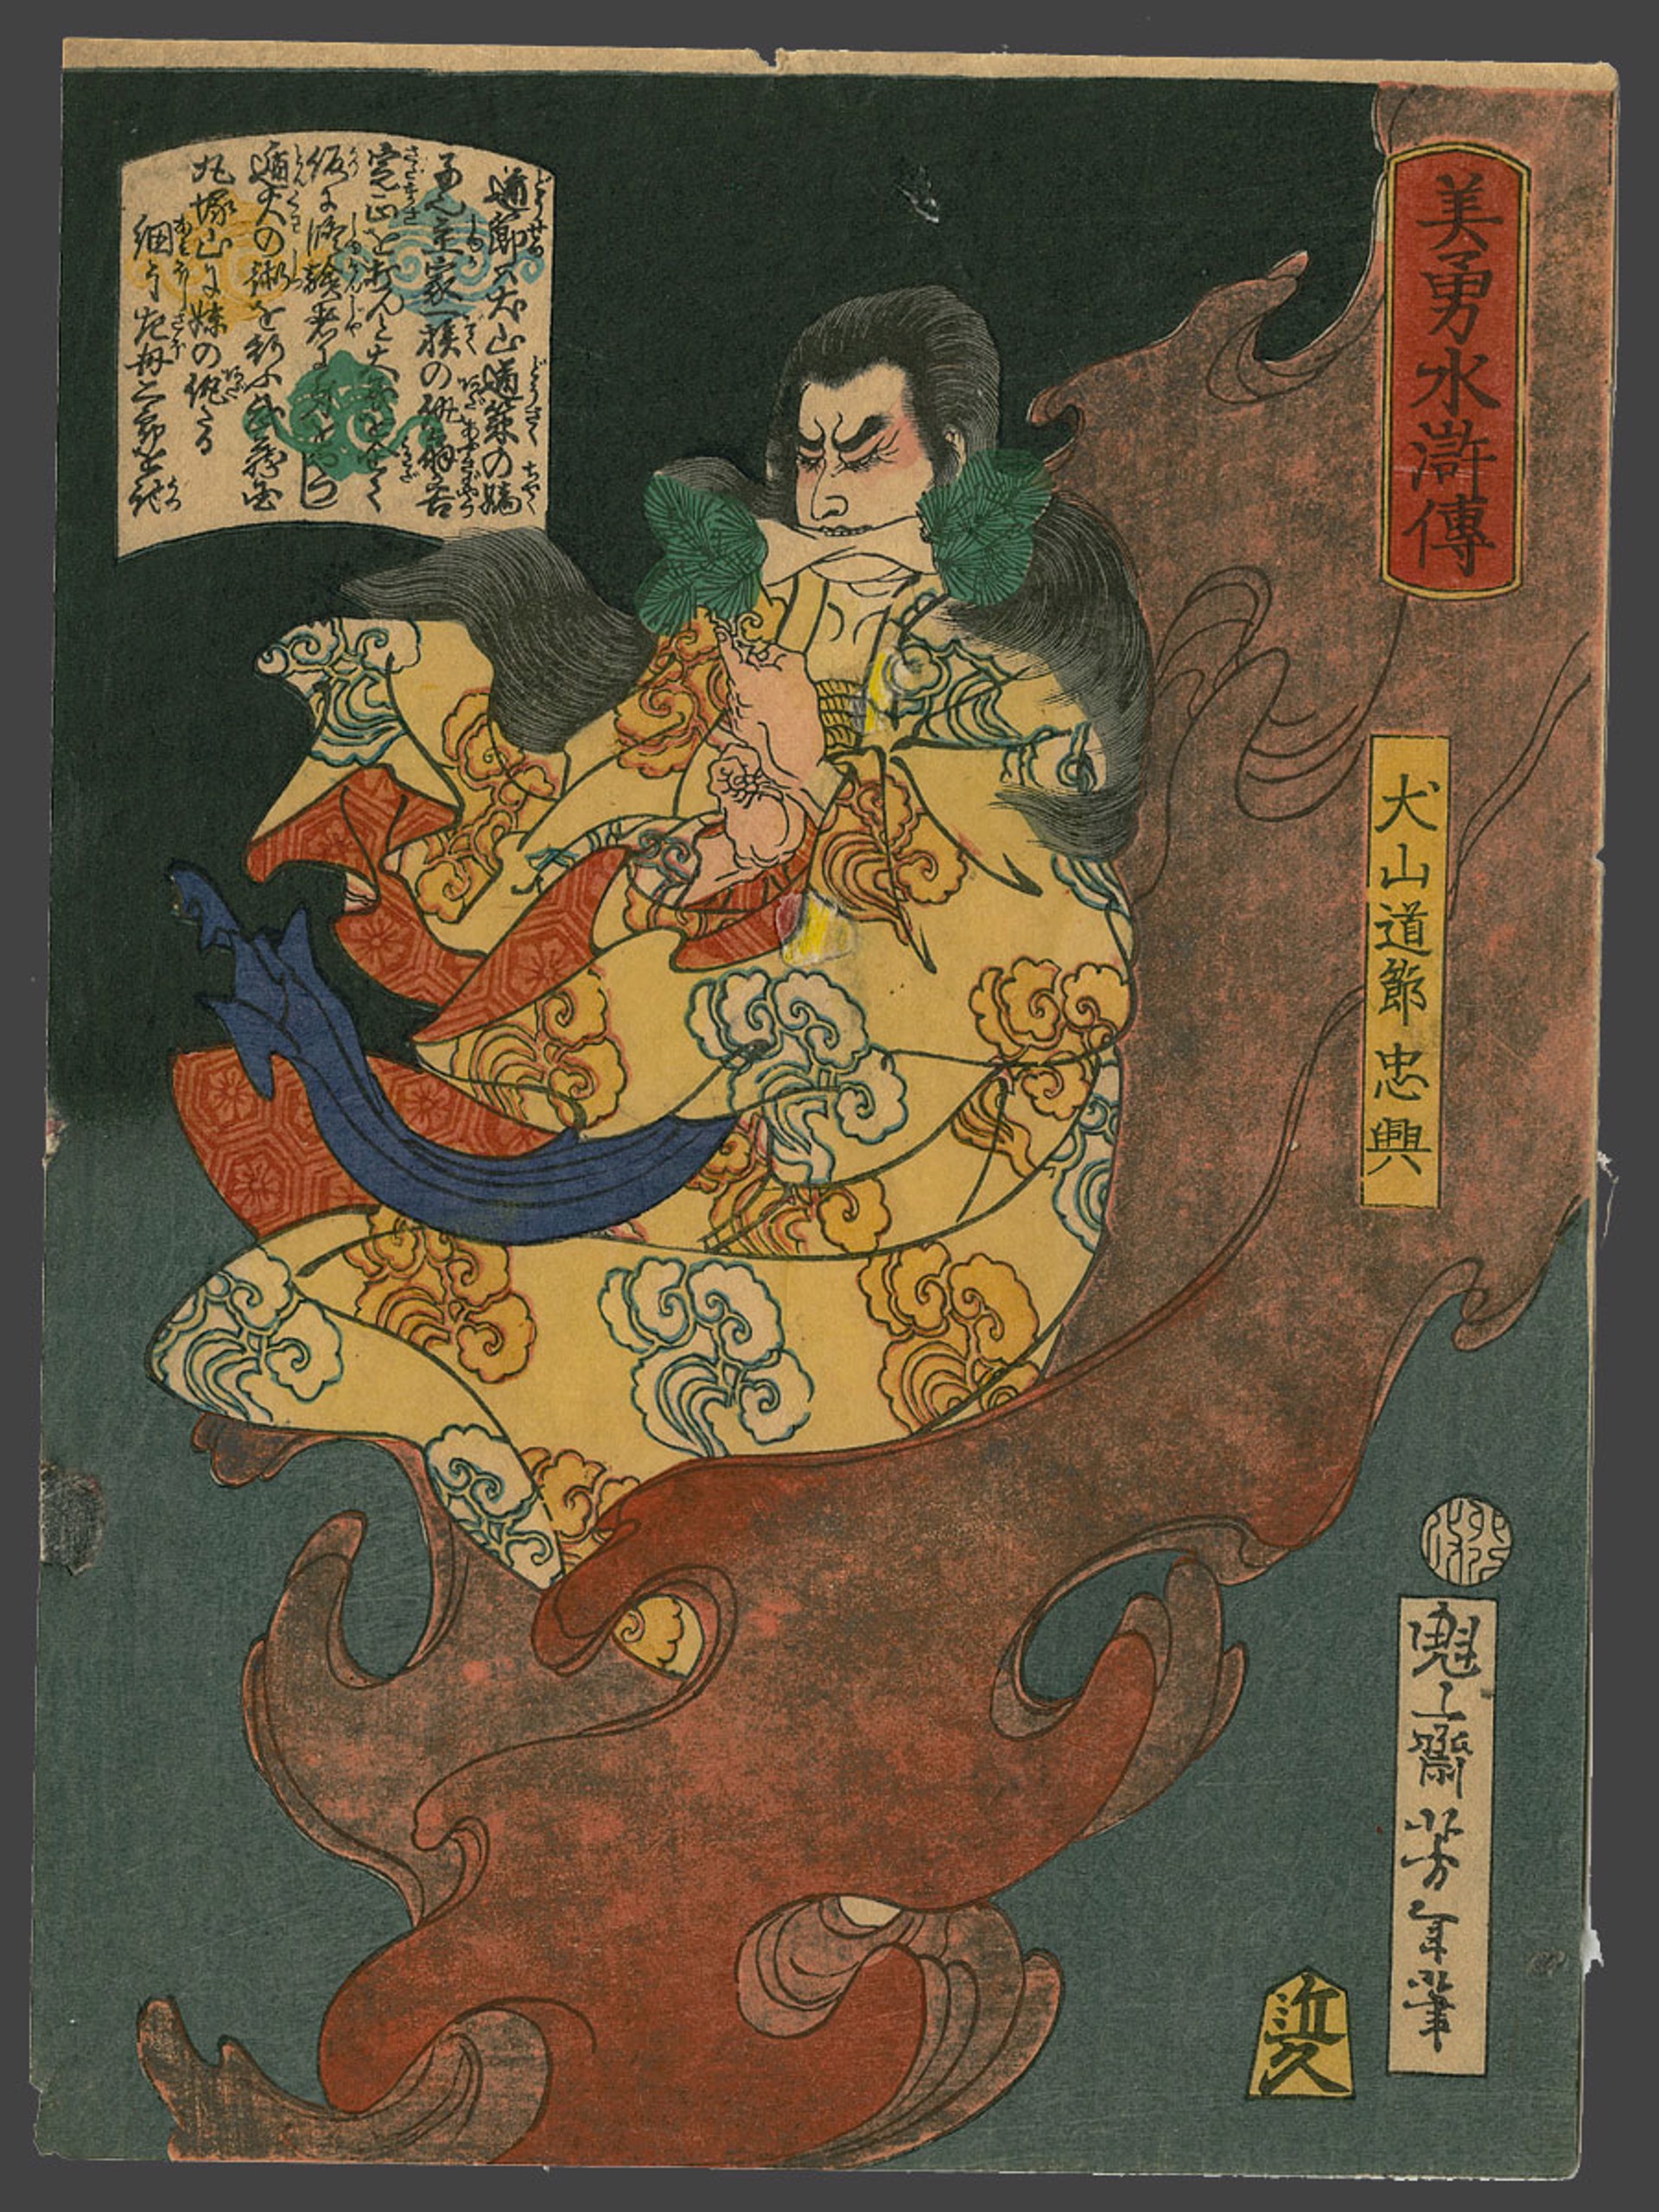 #50, Inuyama Dosetsu Tadaori Flying in Smoke Biyu Suikoden (Beauty and Valor in Tales of the Water Margin) by Yoshitoshi